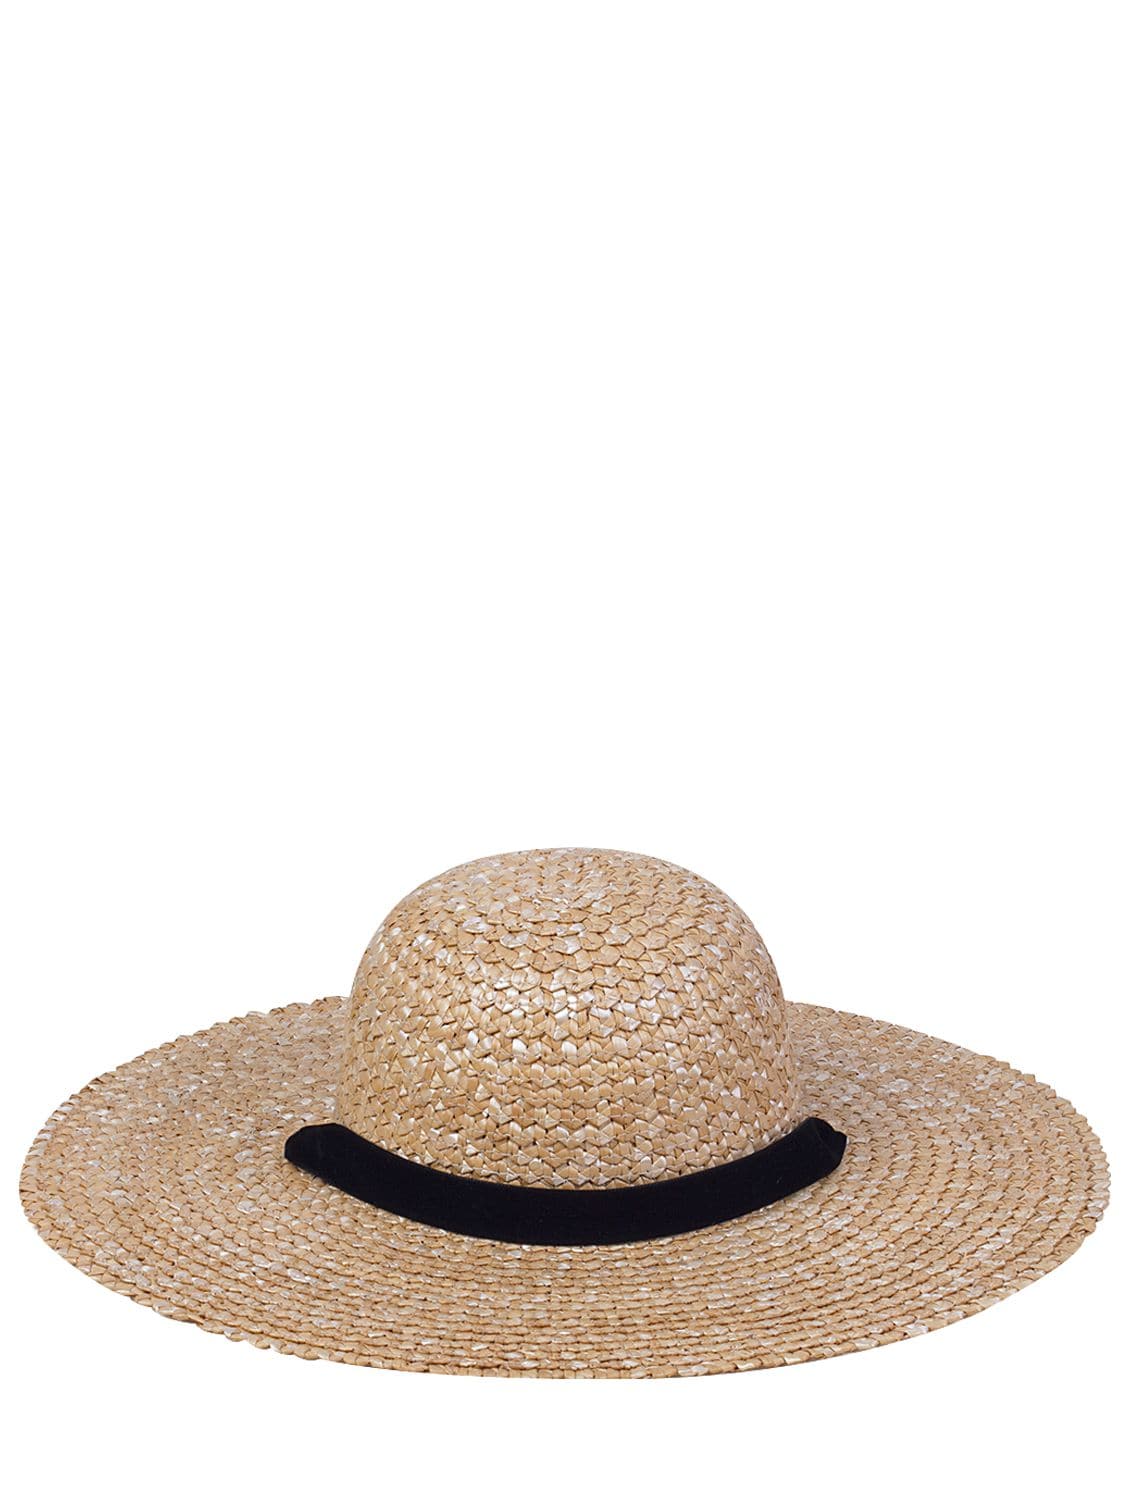 LACK OF COLOR “DOLCE SUN”酒椰纤维帽子,70IJ5A002-TKFUVVJBTA2